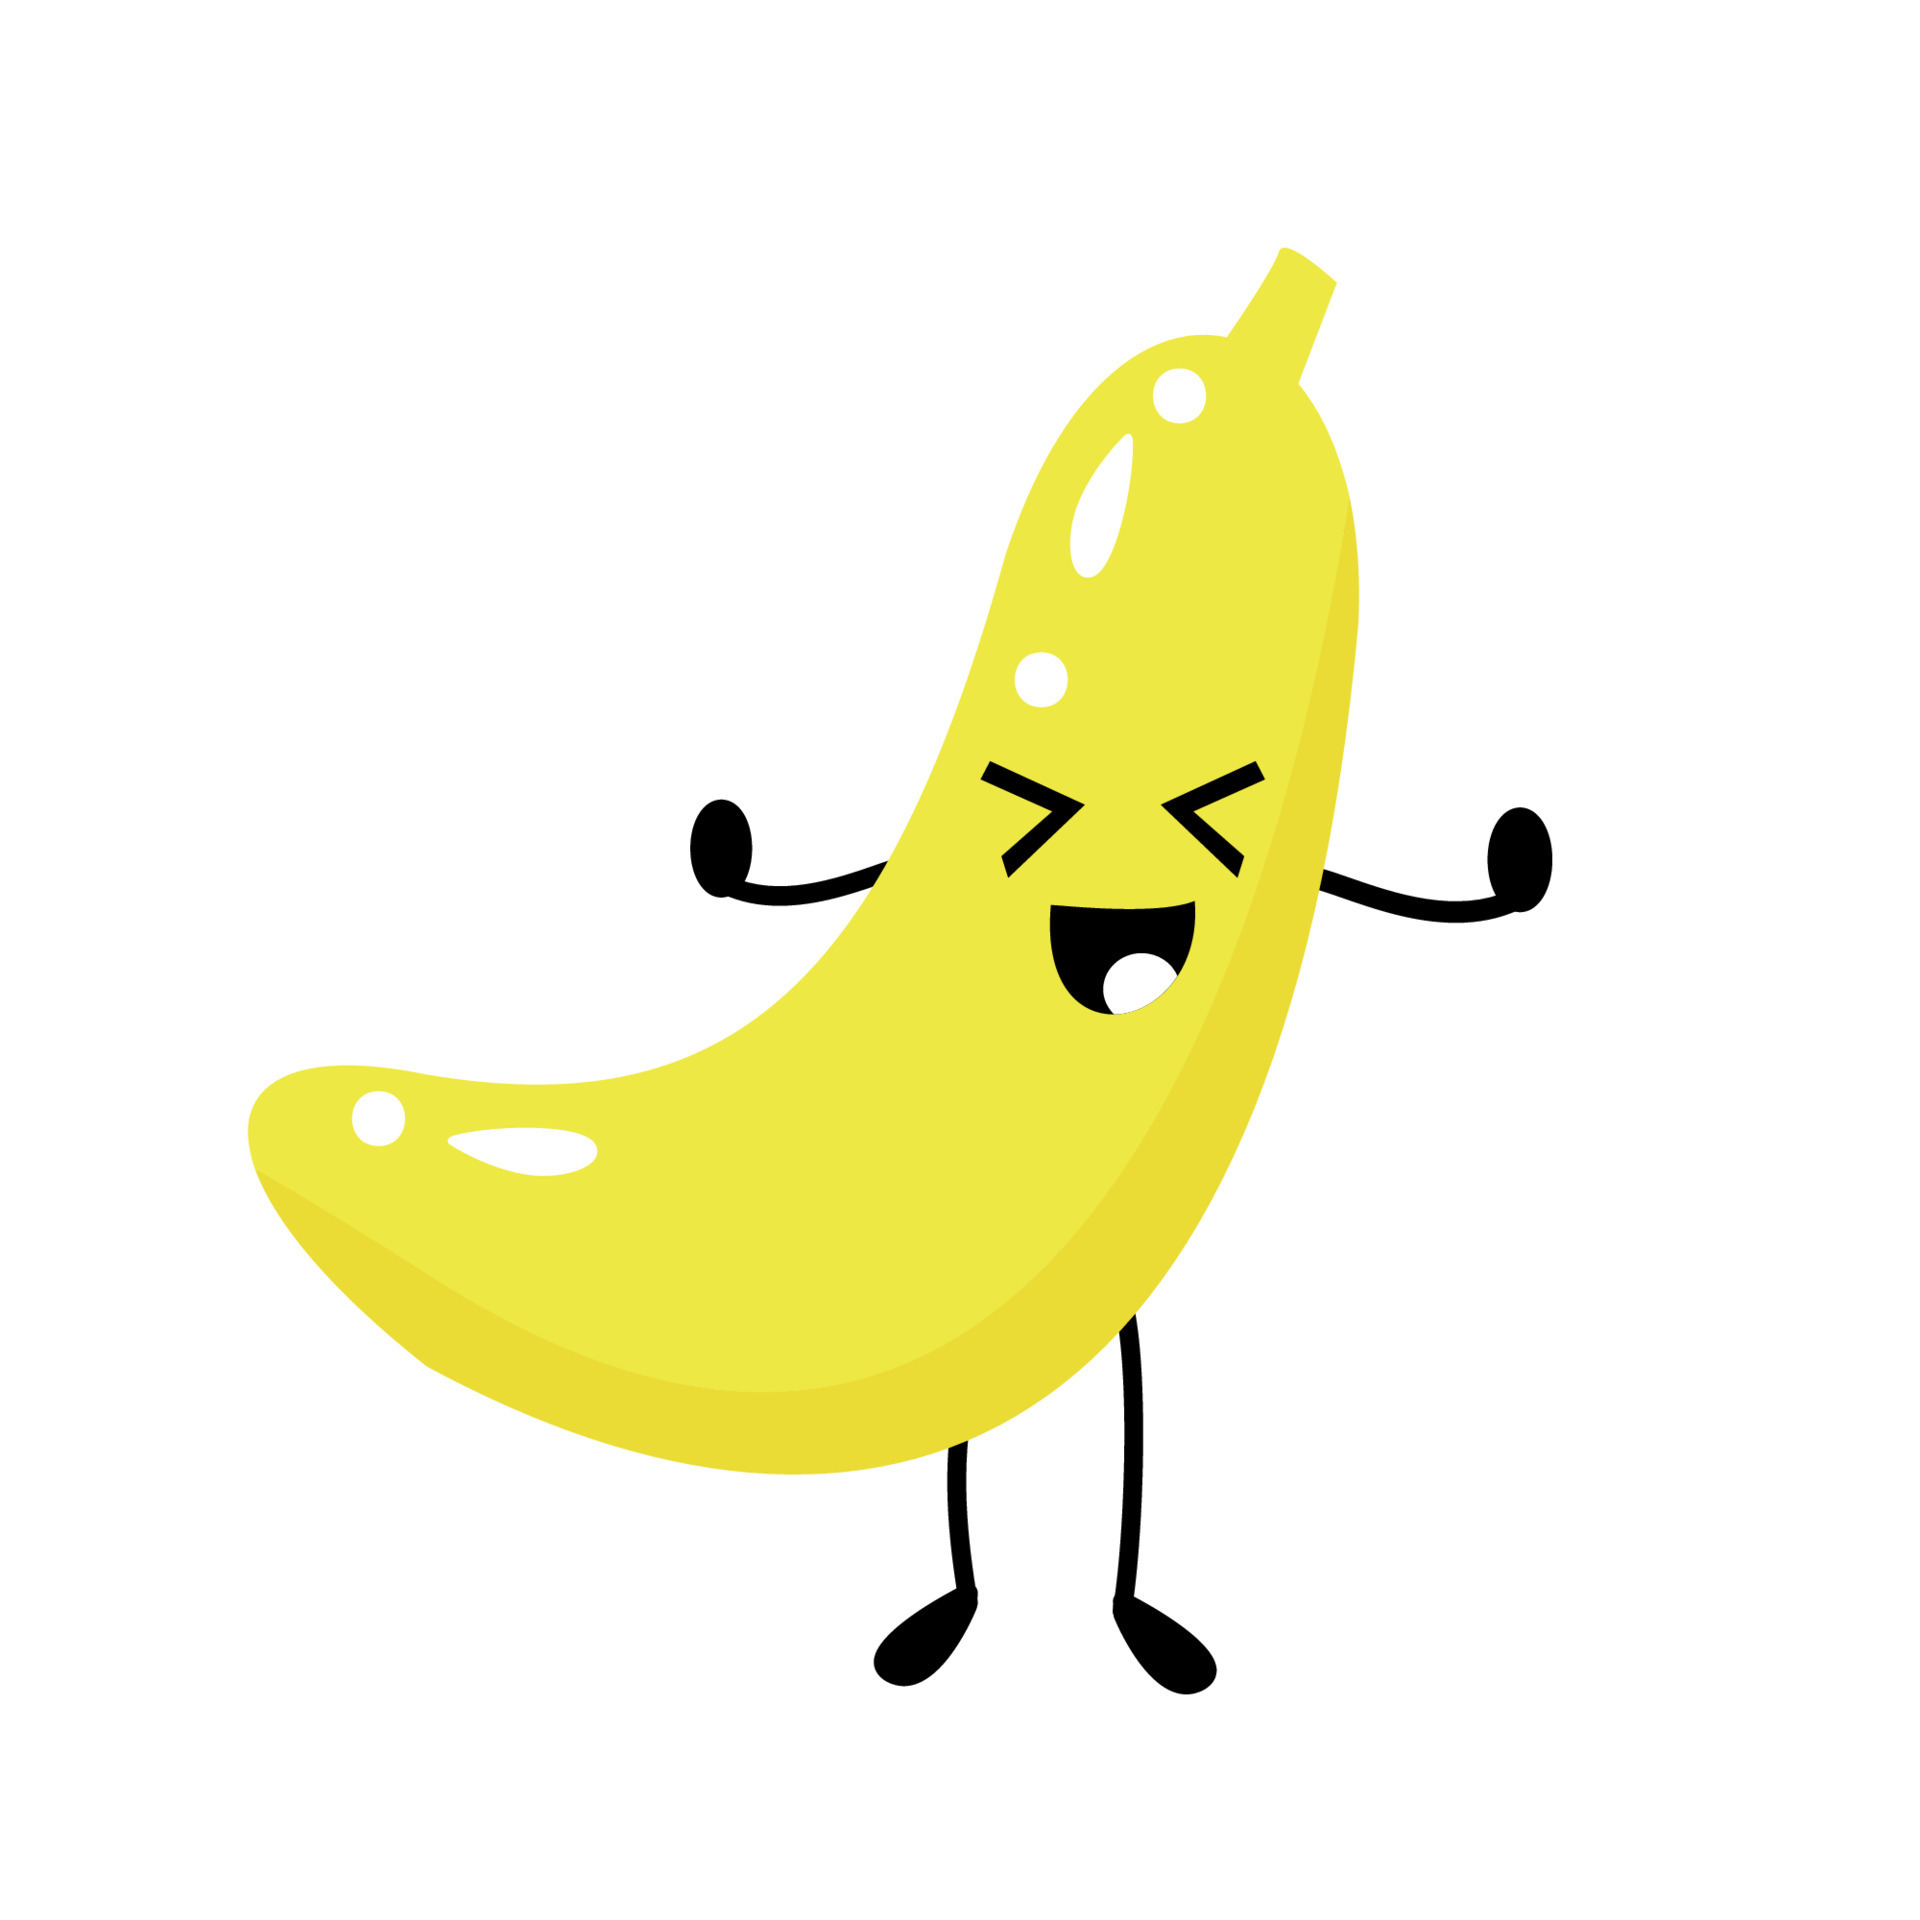 The Silly Banana